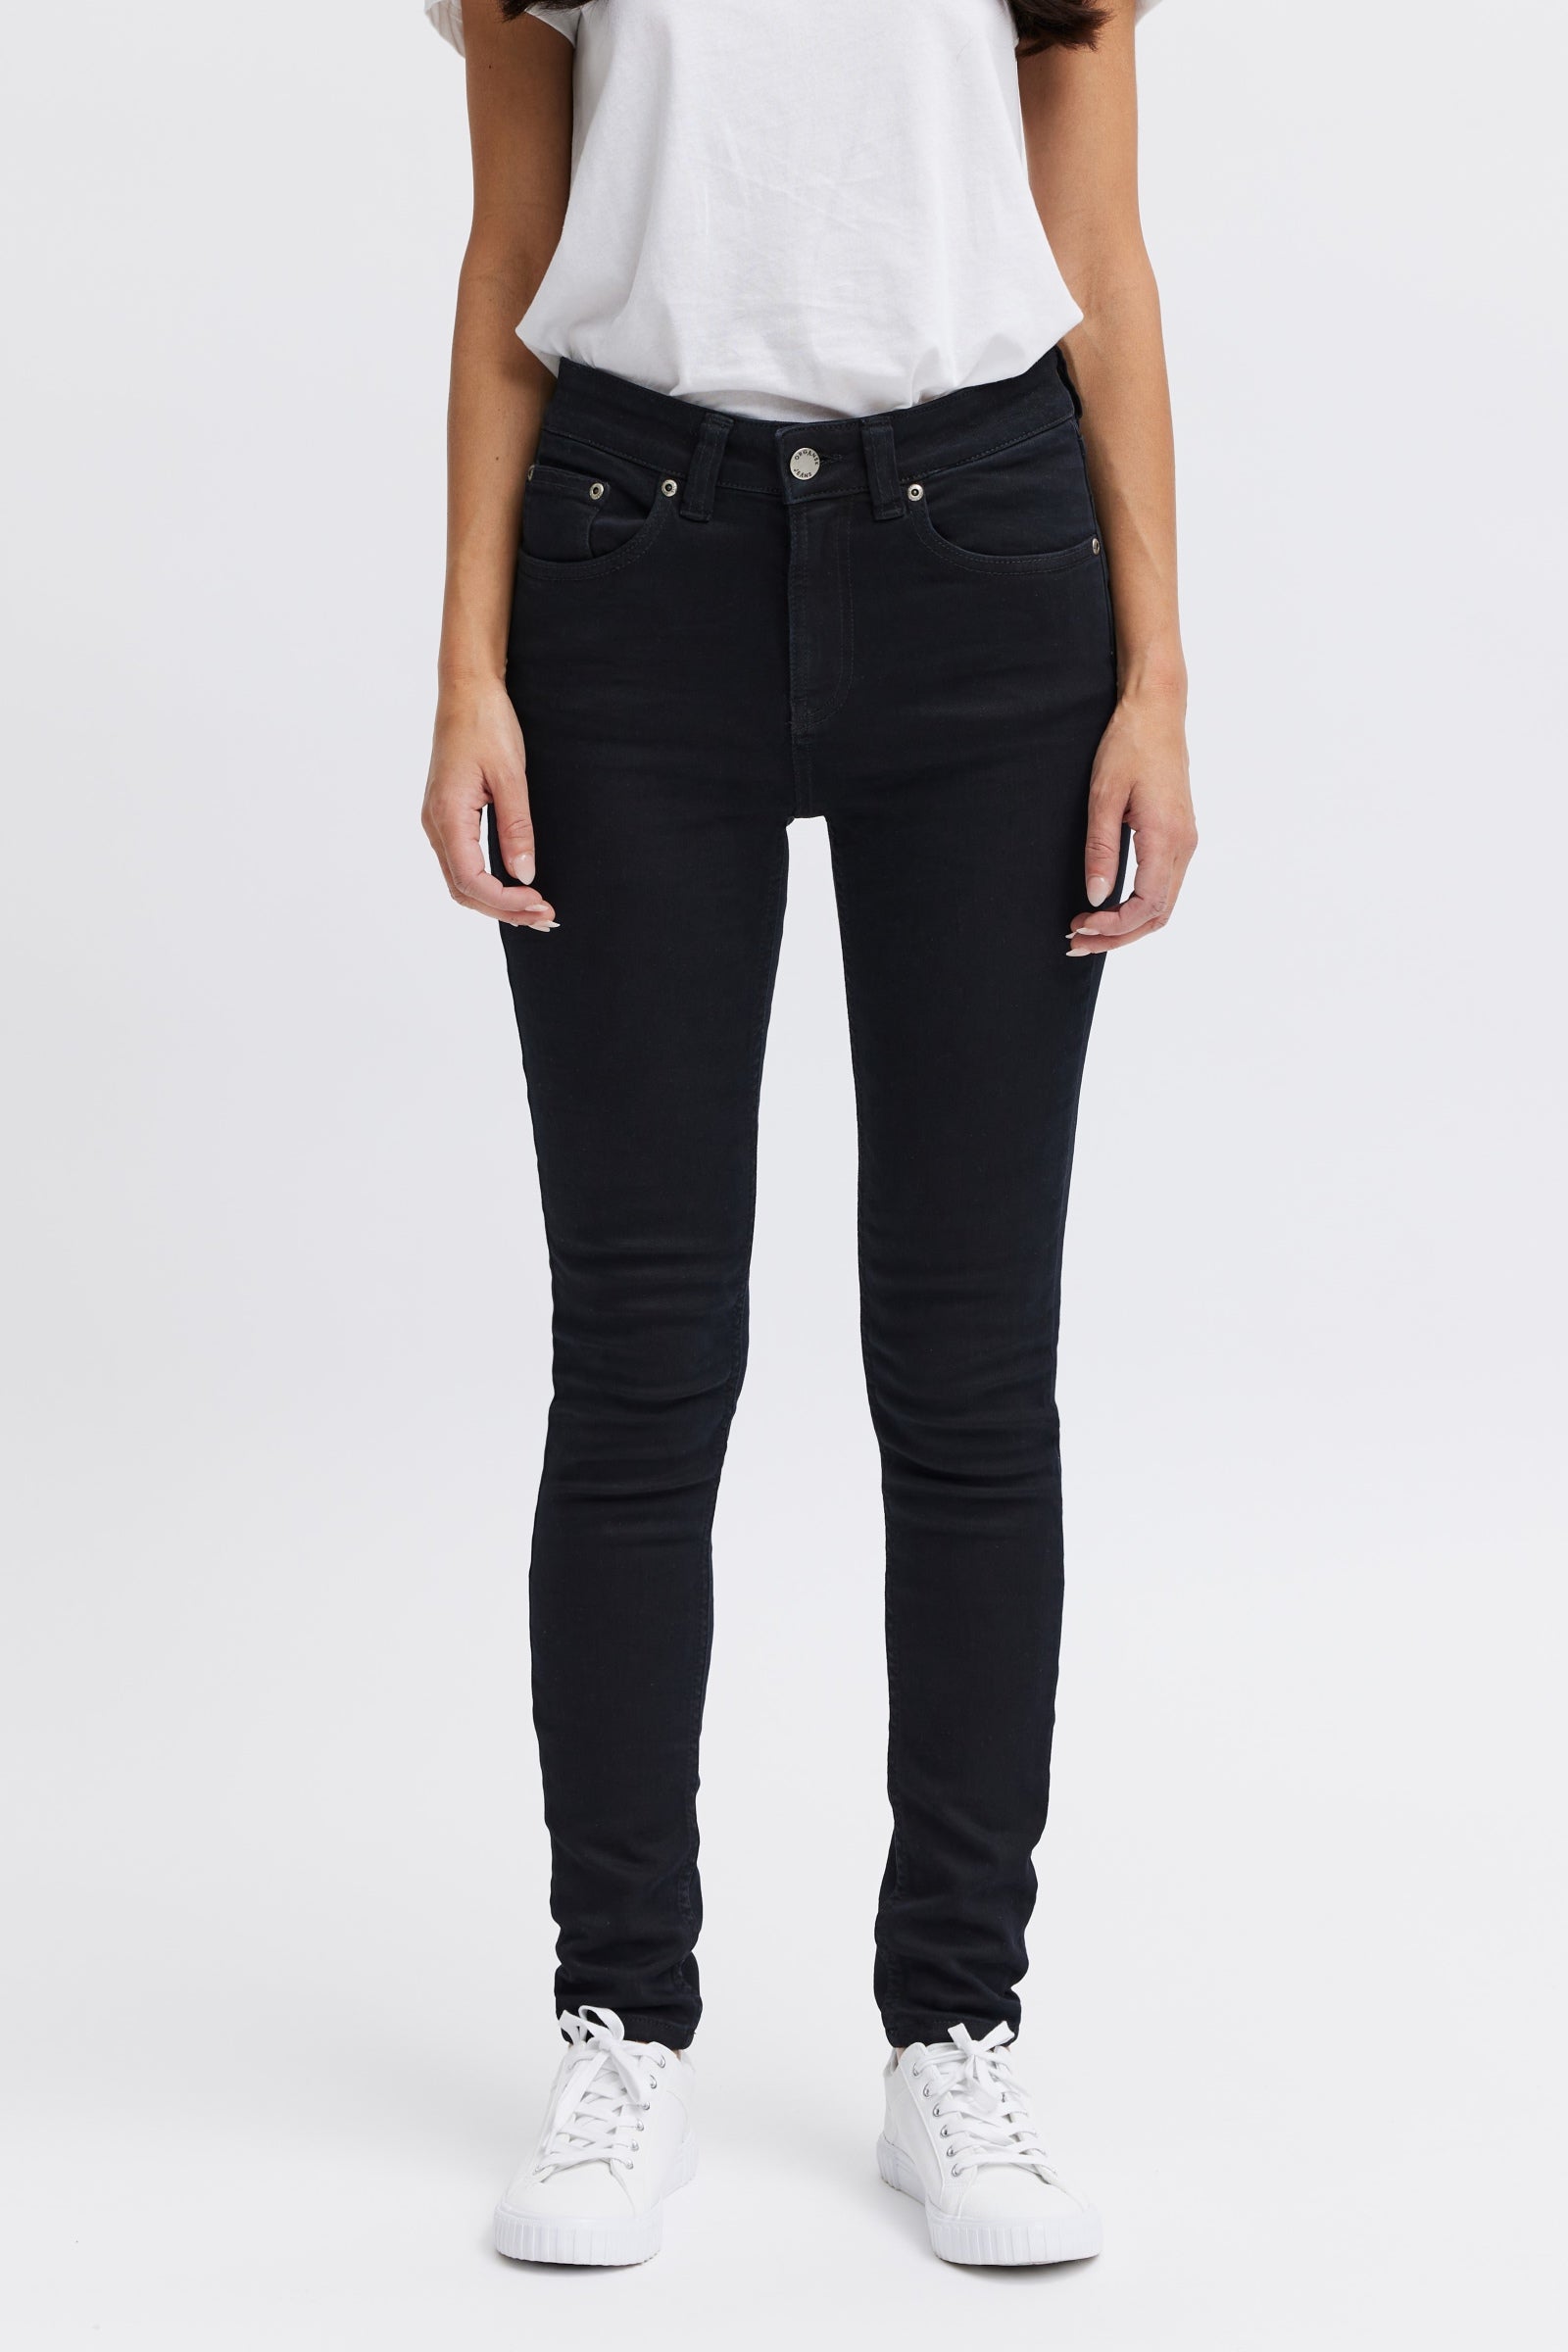 Breeze Jeans™, Organic Cotton, Women's Slim + Skinny Fit